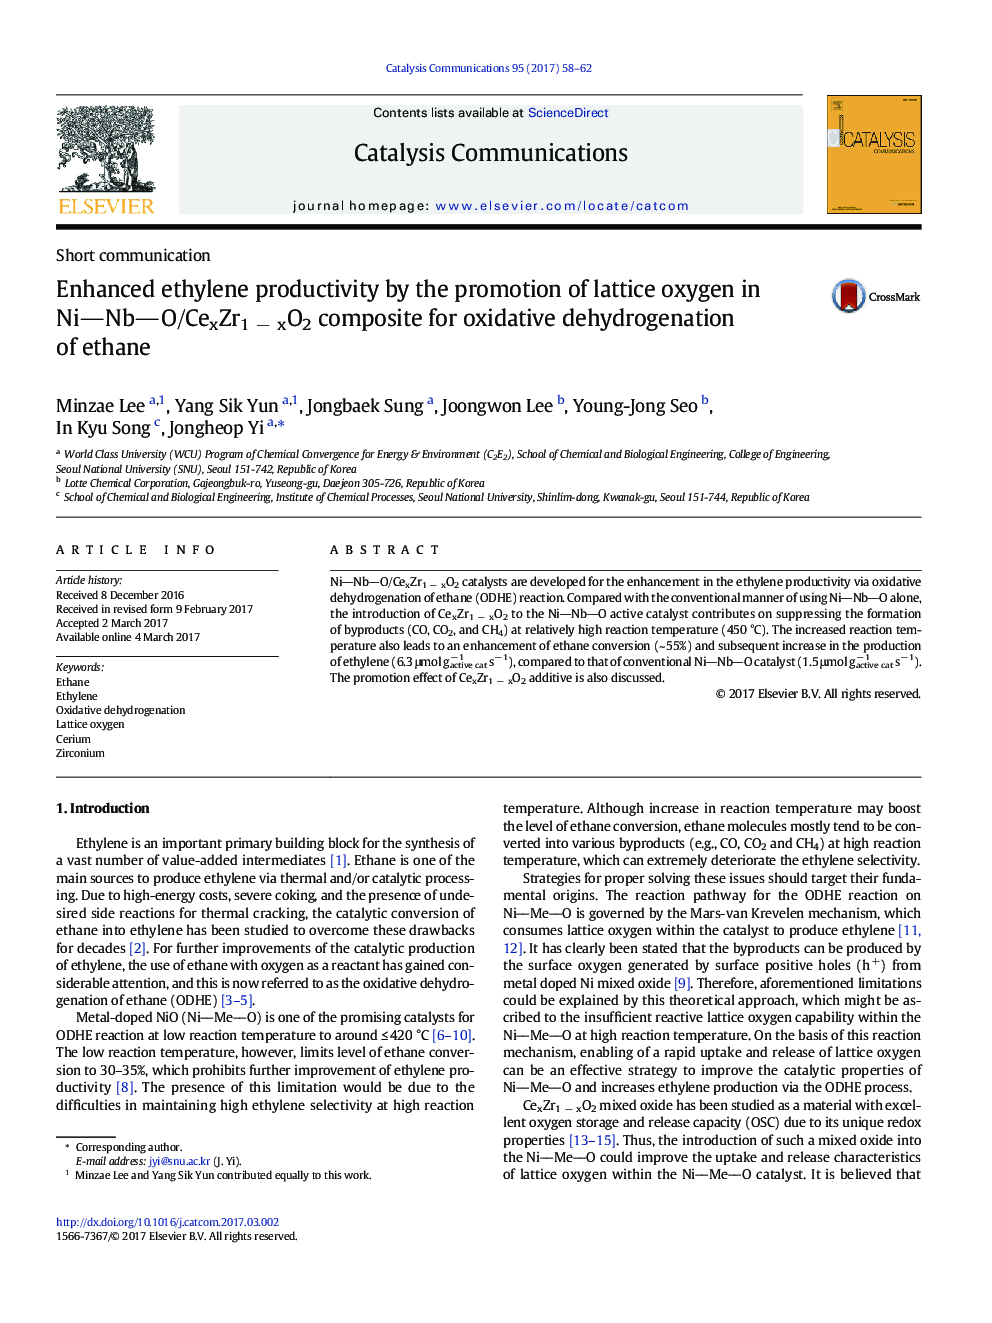 Enhanced ethylene productivity by the promotion of lattice oxygen in NiNbO/CexZr1Â âÂ xO2 composite for oxidative dehydrogenation of ethane